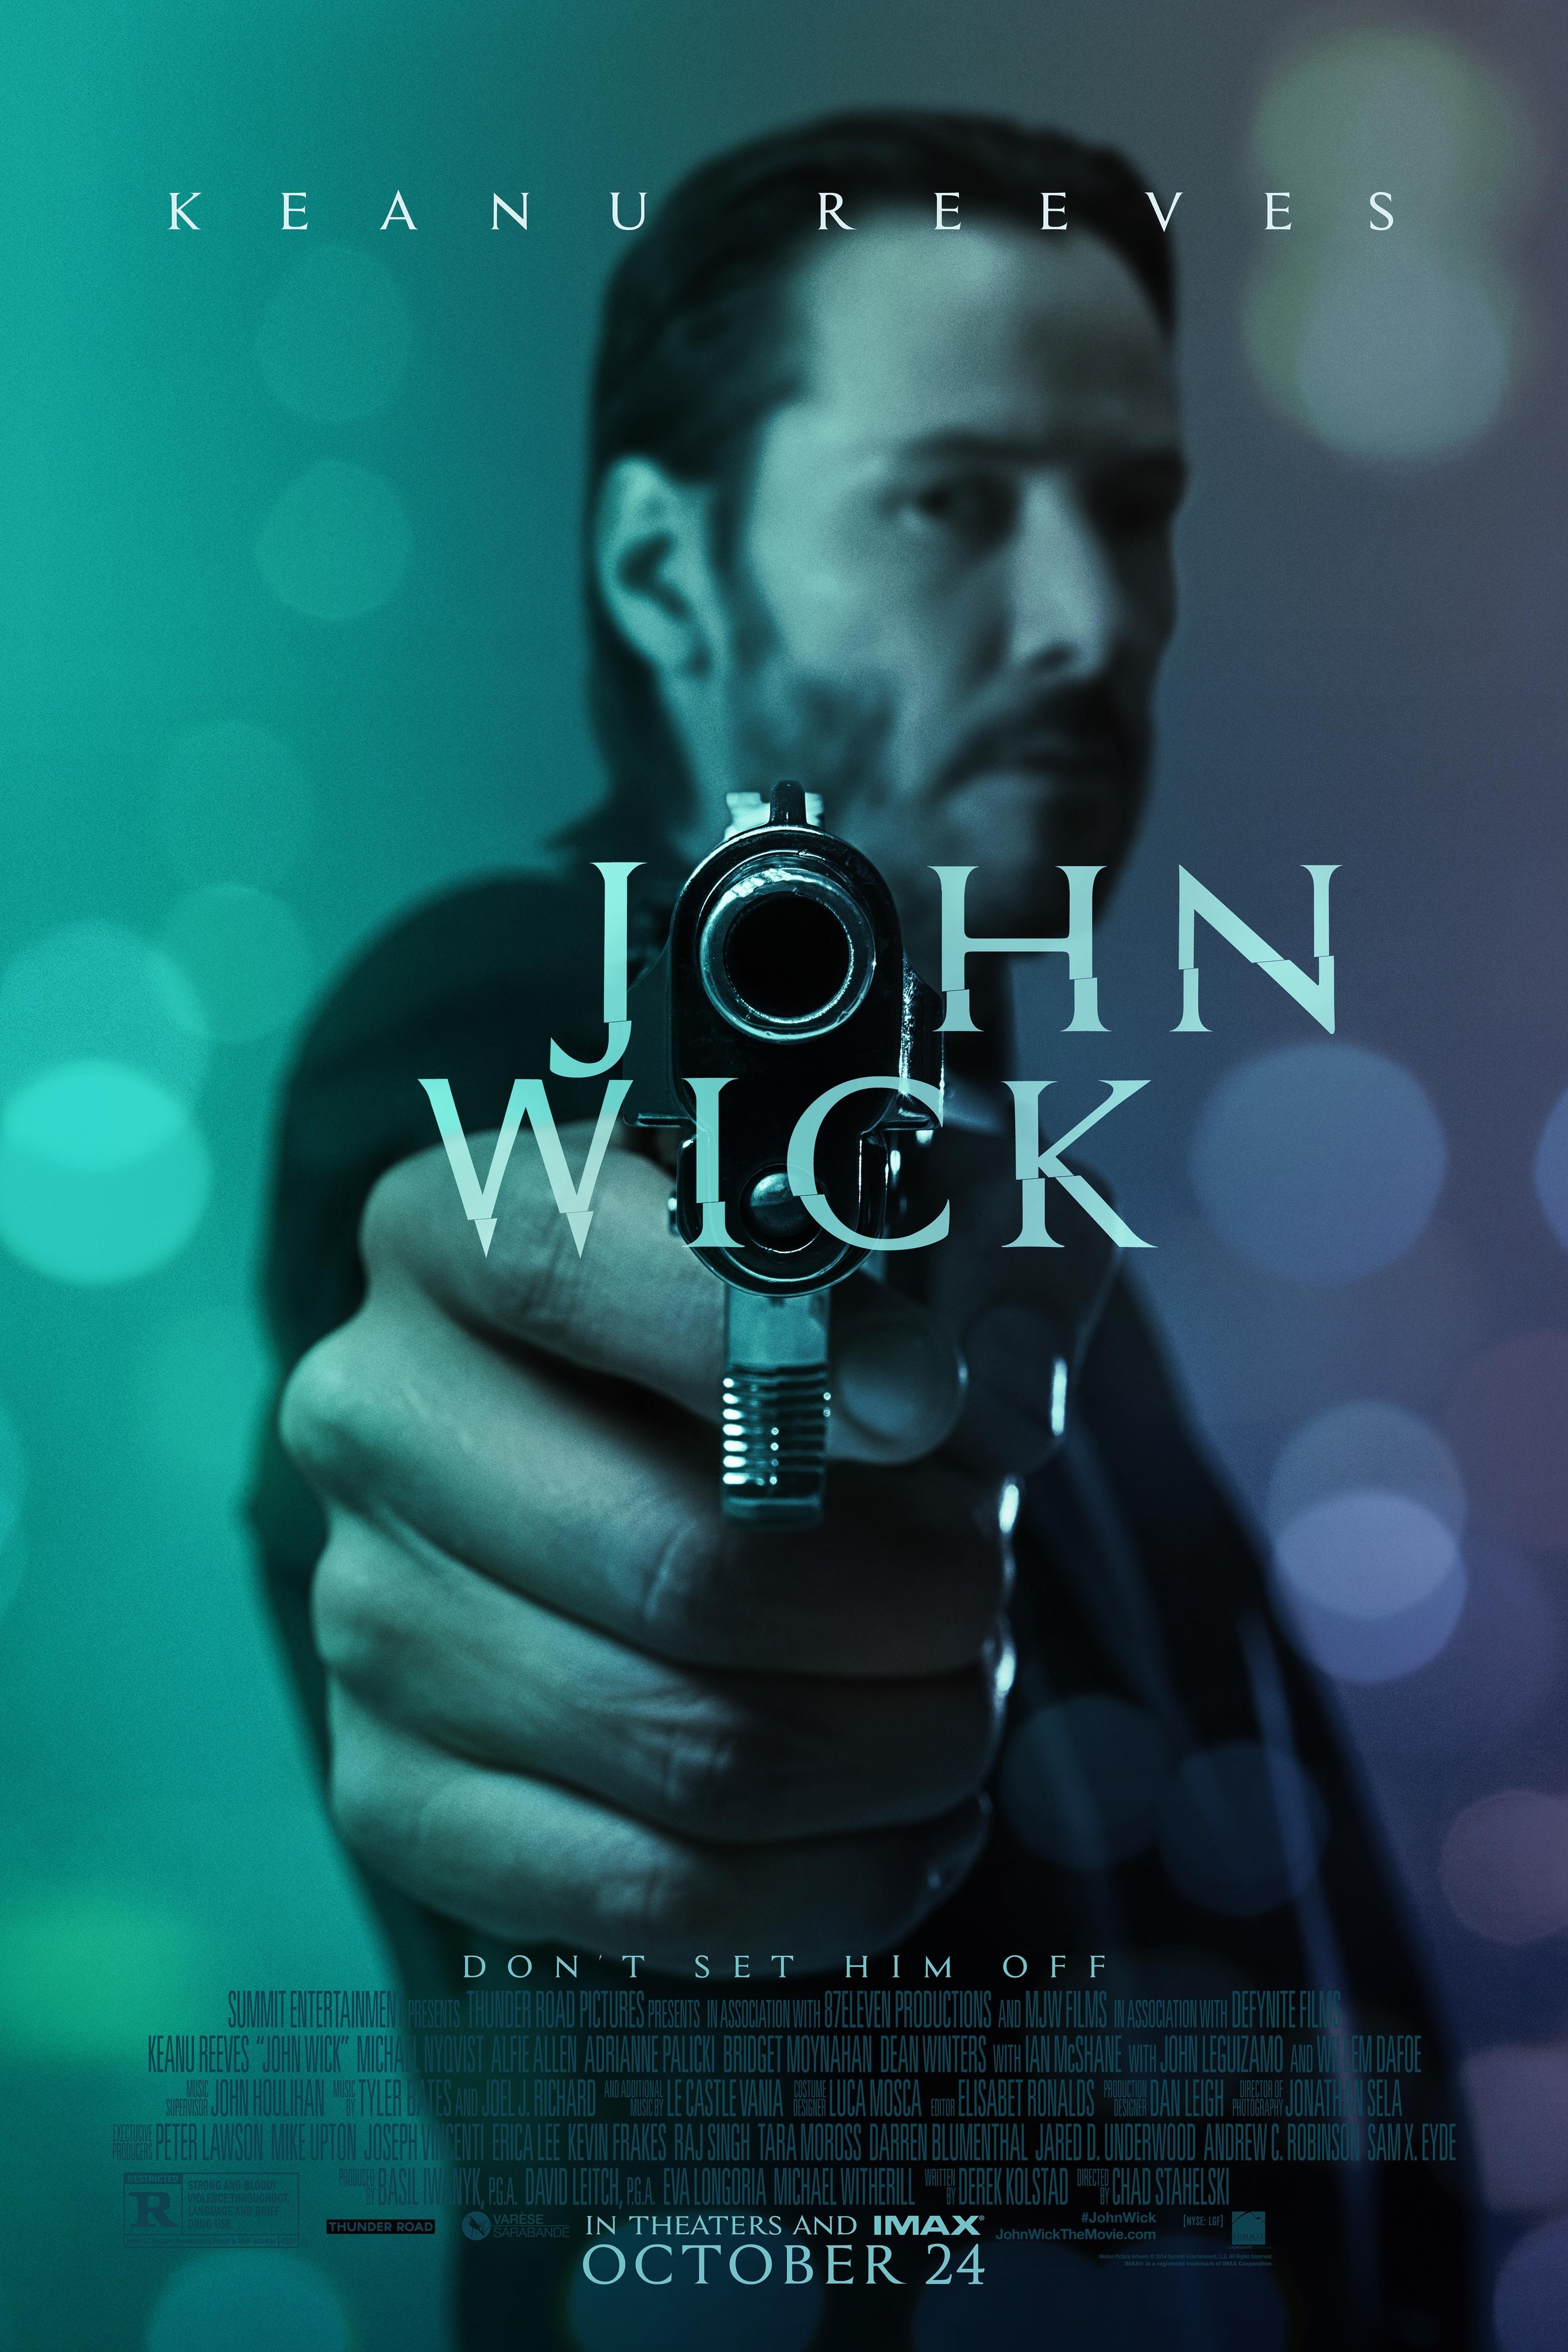 John Wick 2, Where to Stream and Watch